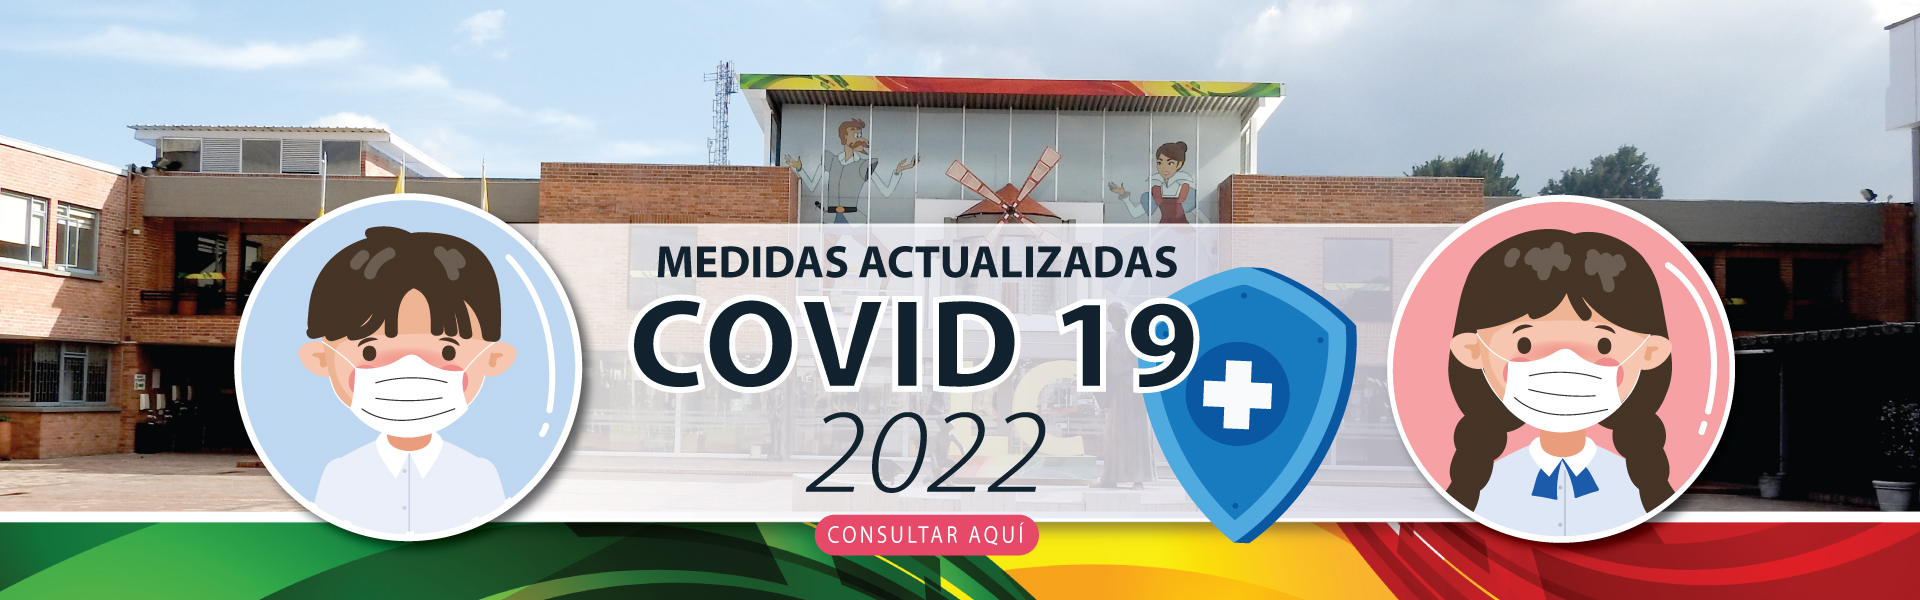 banneredidas covid 2022 01